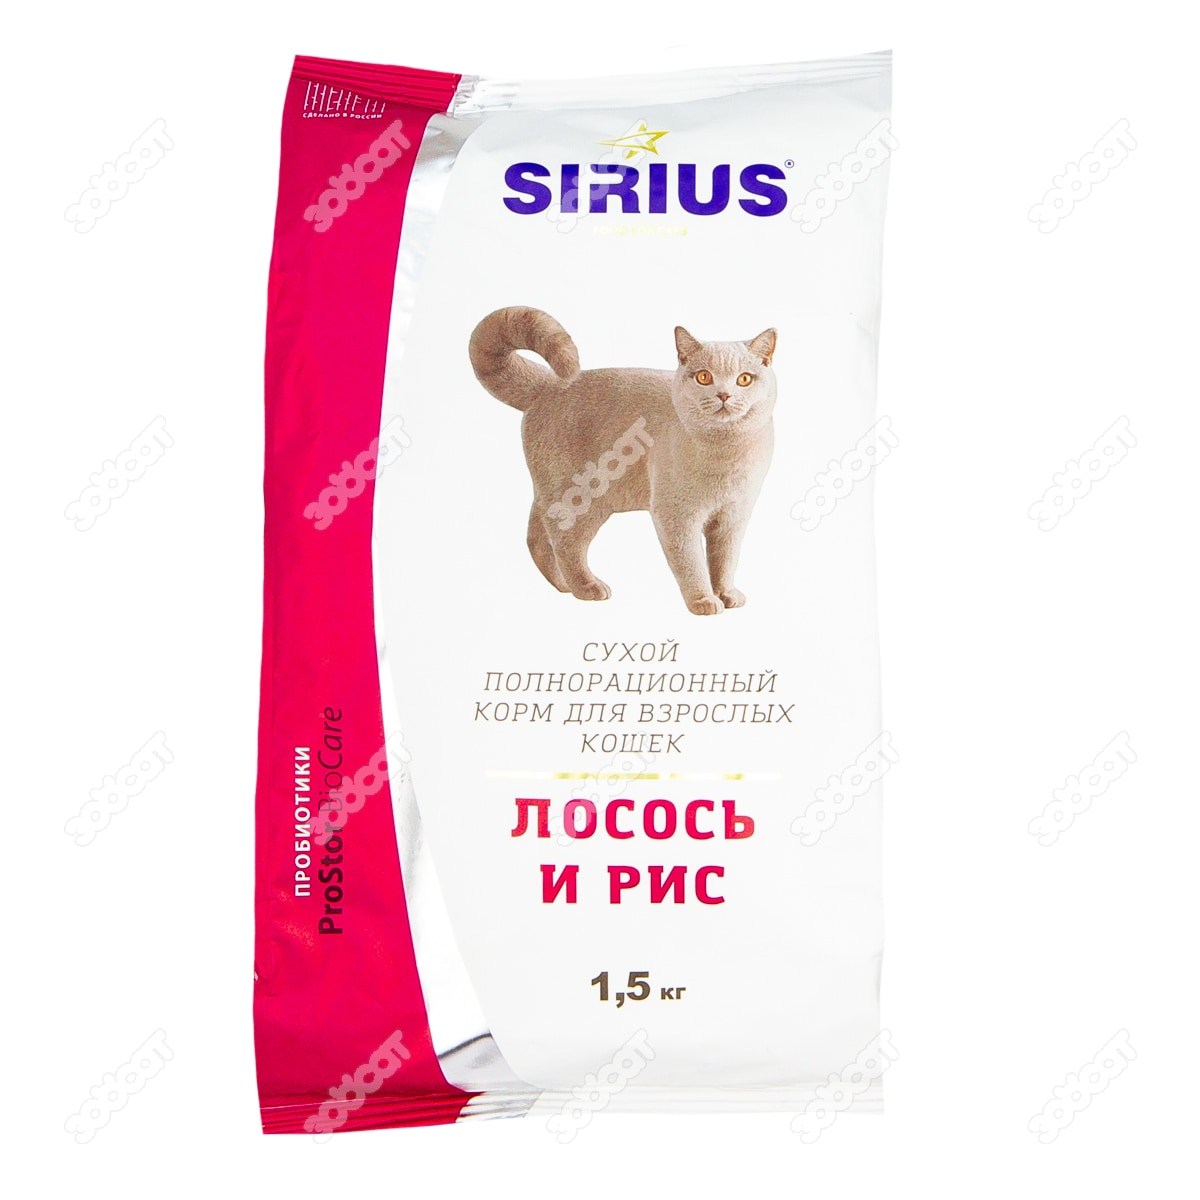 Сириус корм для кошек 10 кг купить